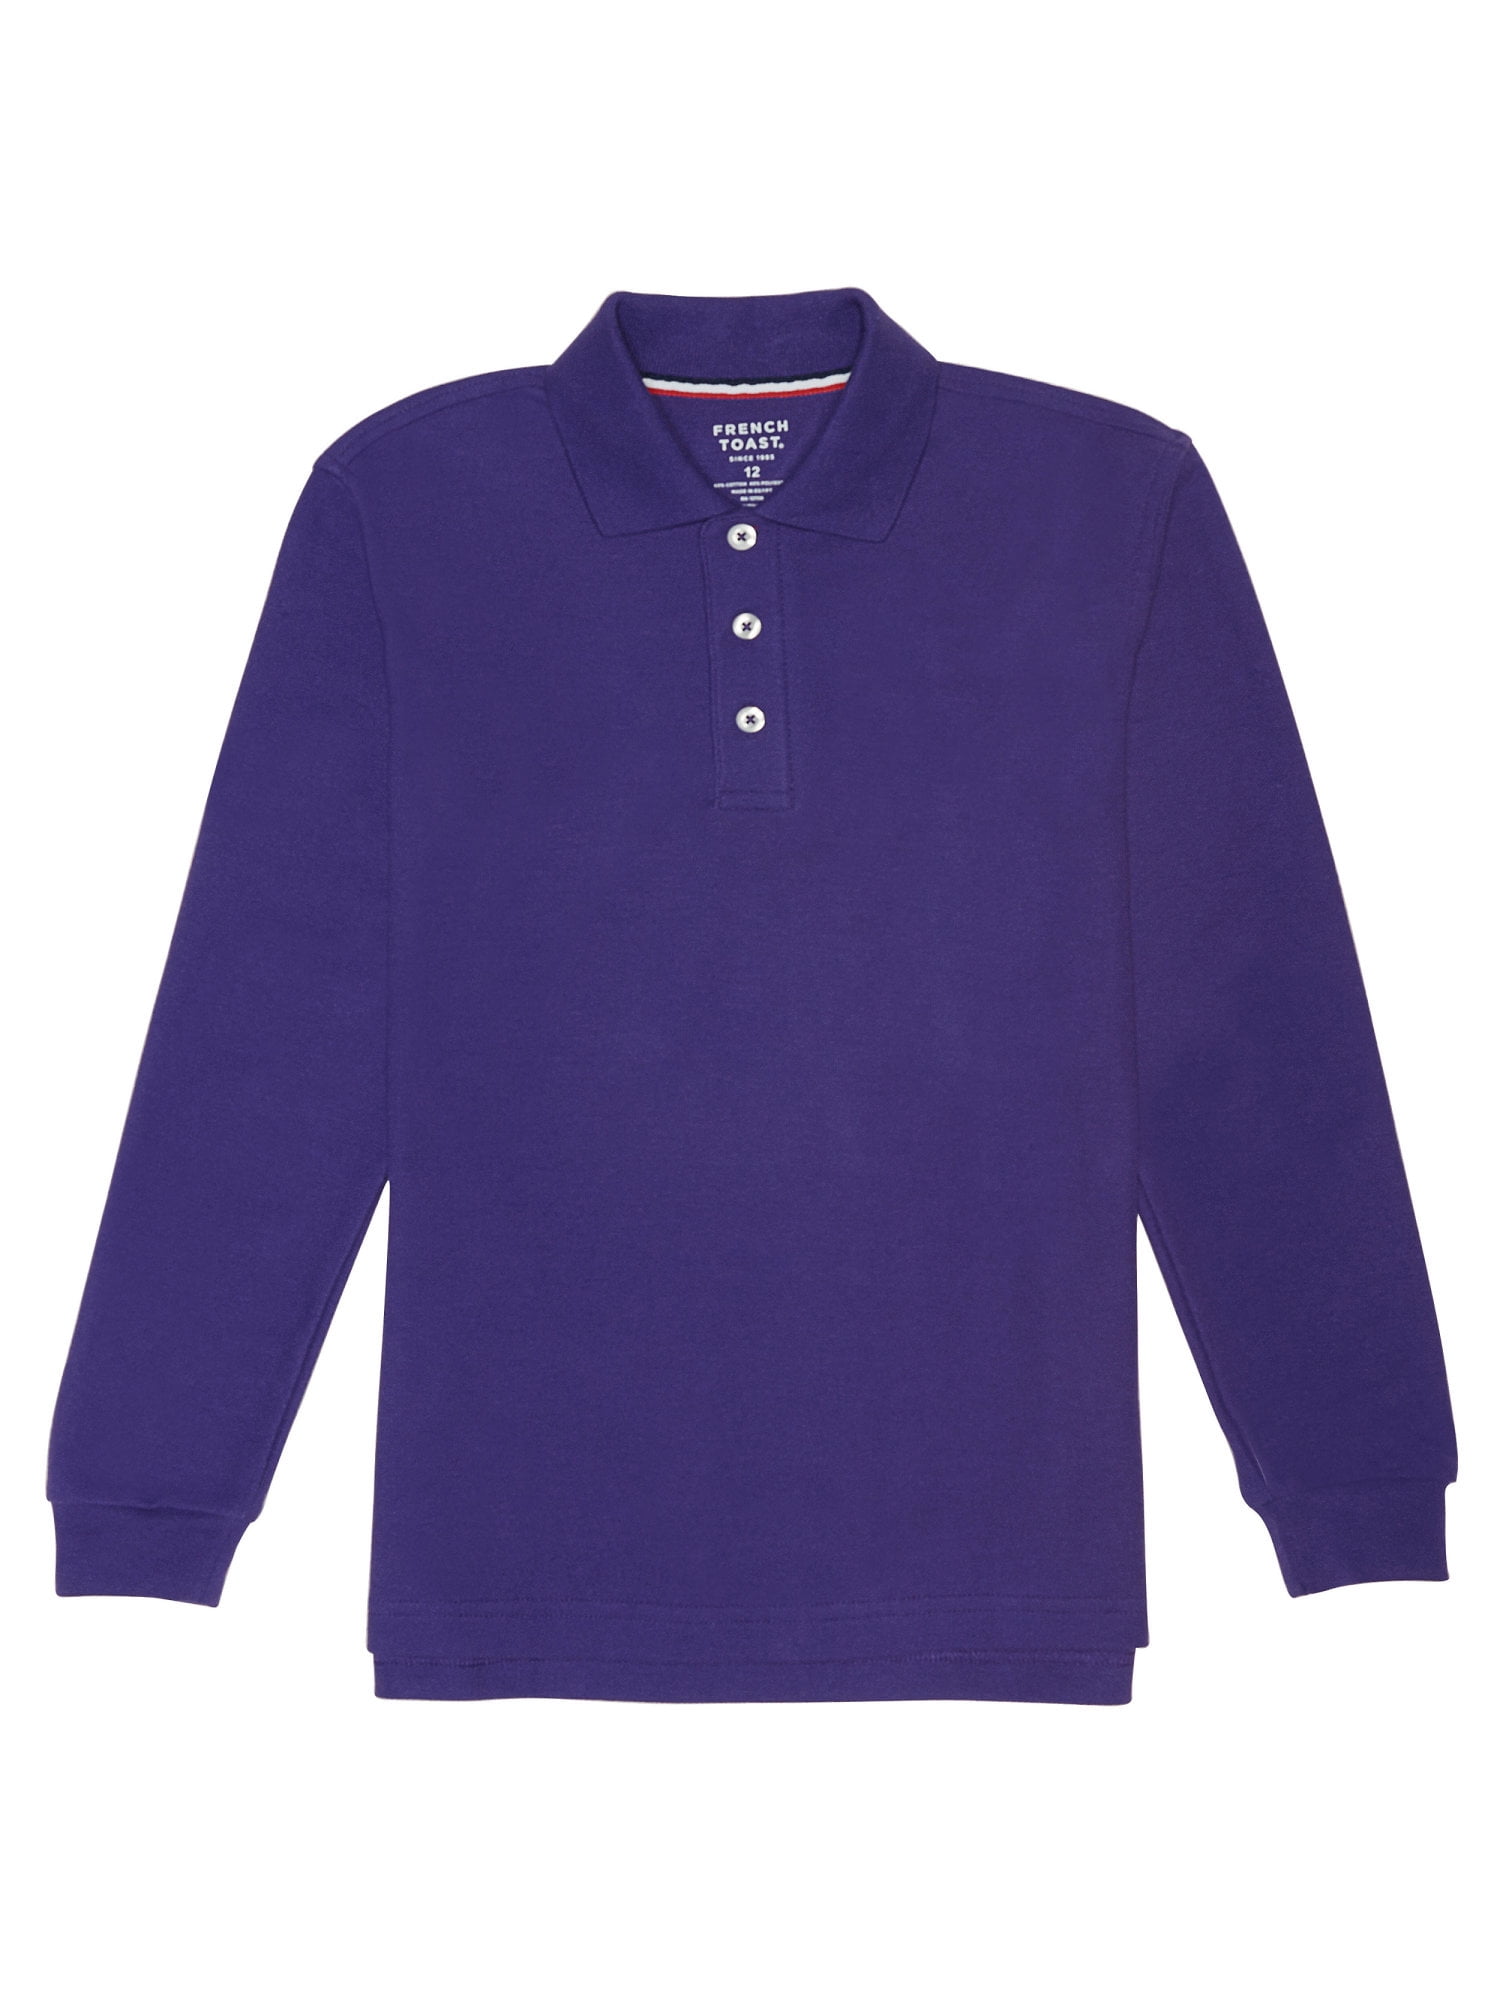 New Boy's Youth French Toast Medium Blue Henley Shirt Size 14/16 School Uniform 